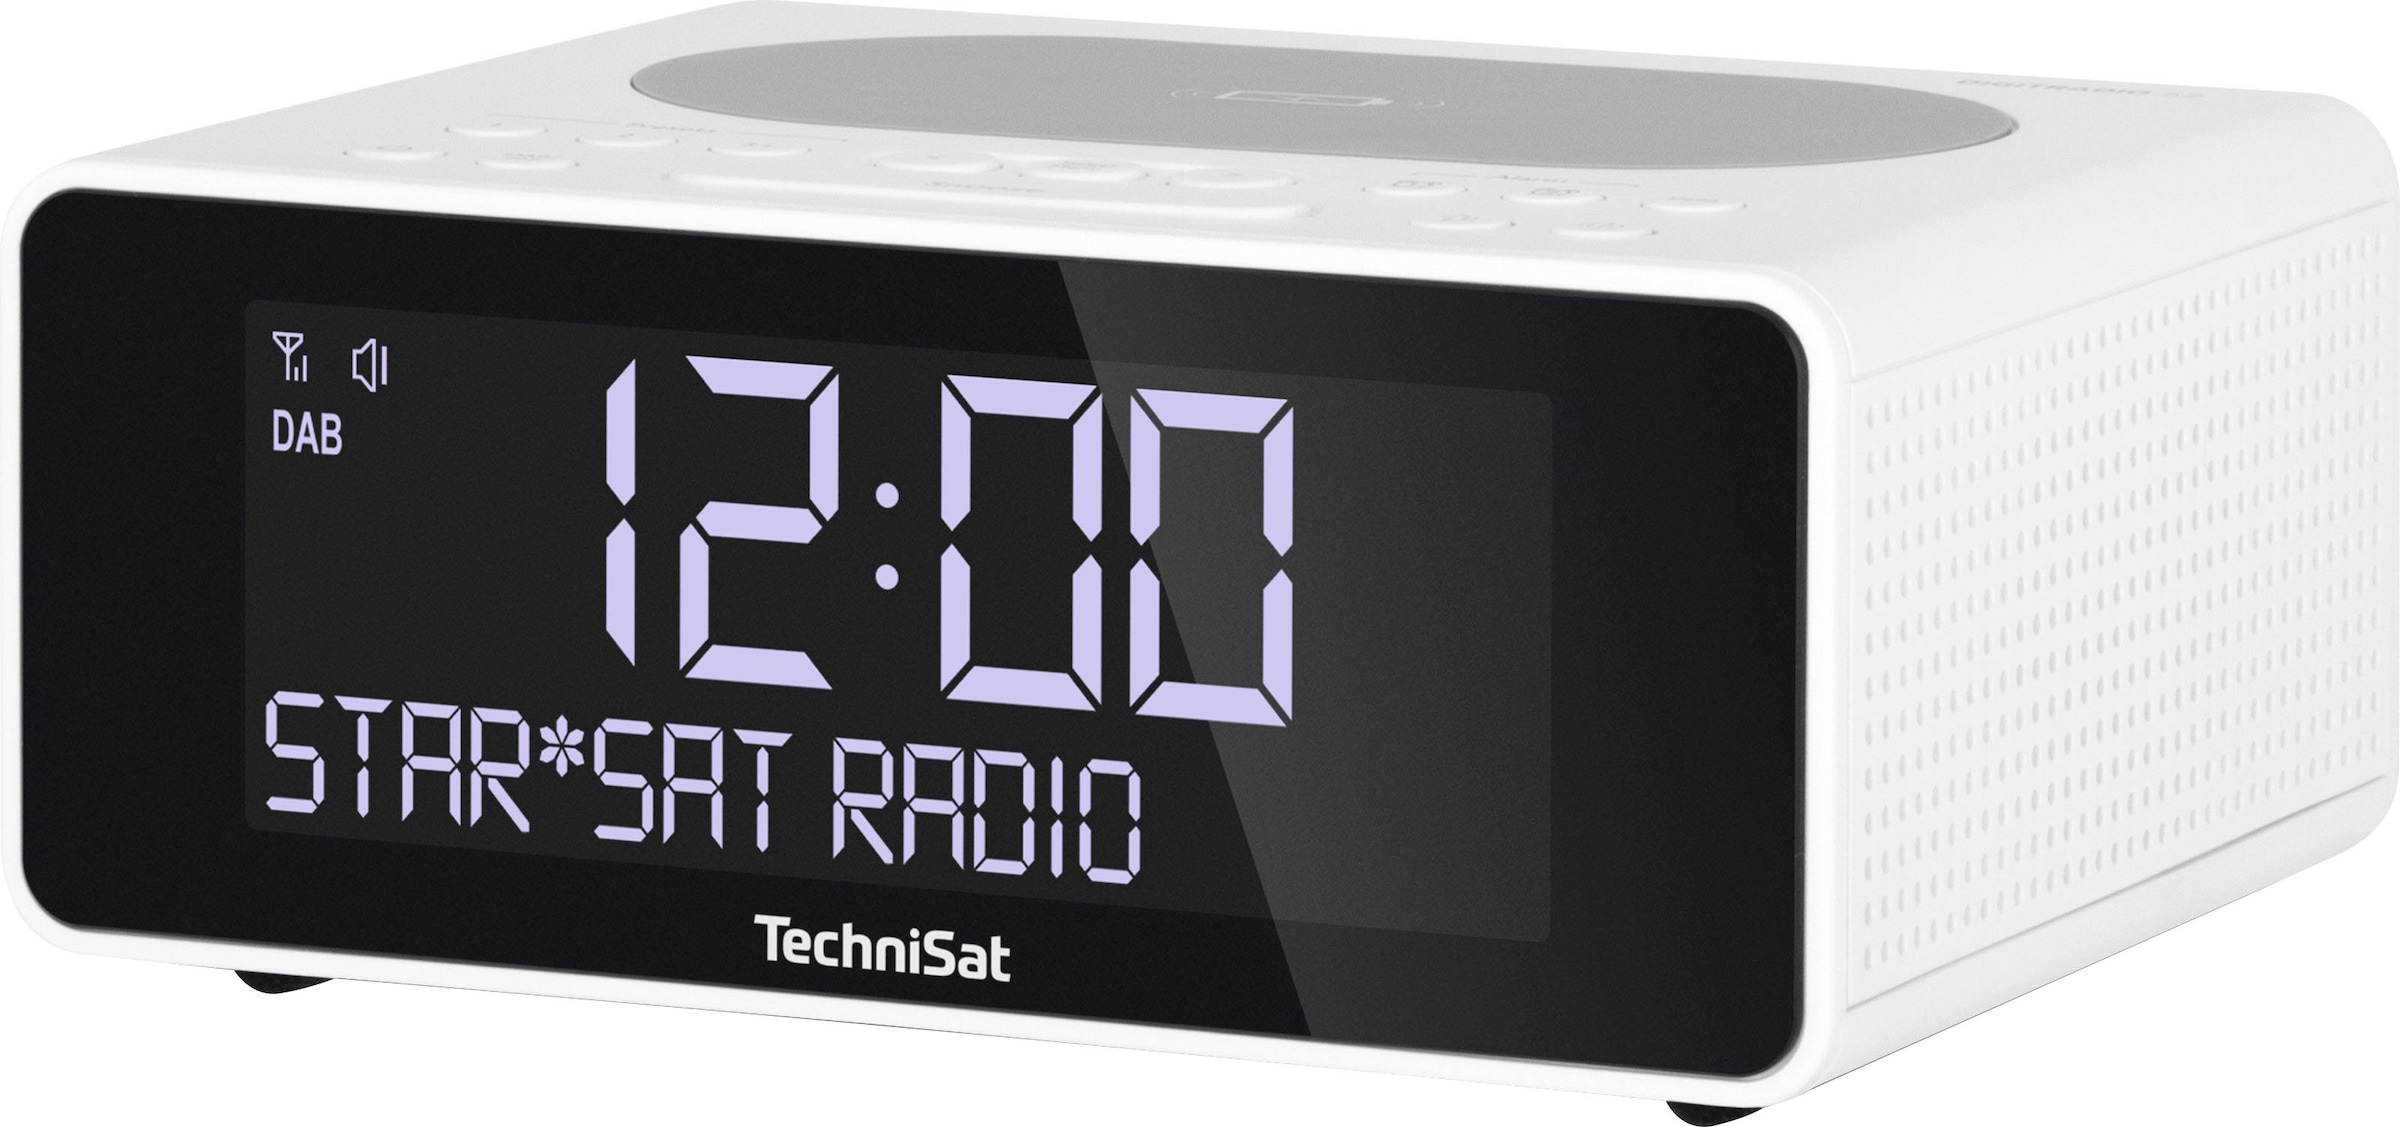 TechniSat Radiowecker »DIGITRADIO 52 - Stereo Uhrenradio«, mit DAB+, Snooze-Funktion, dimmbares Display, Sleeptimer